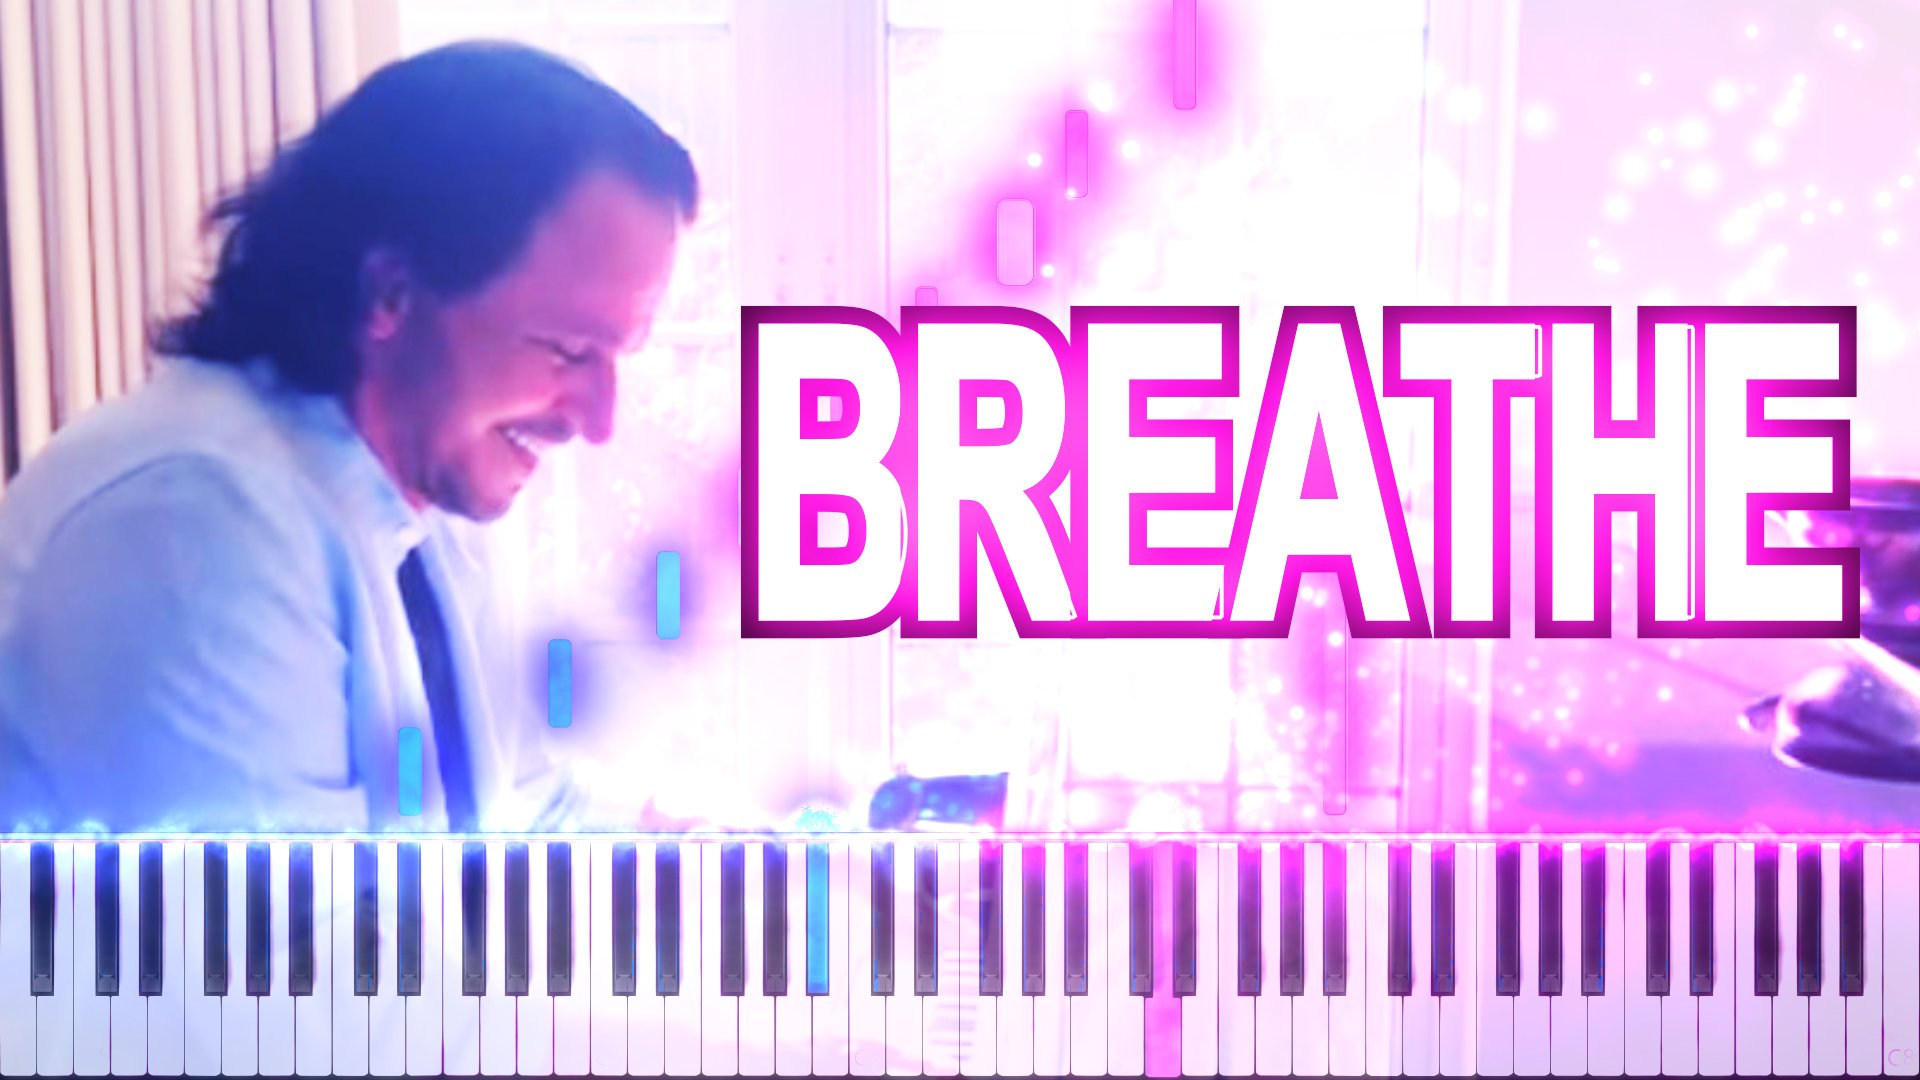 Yanni - Breathe